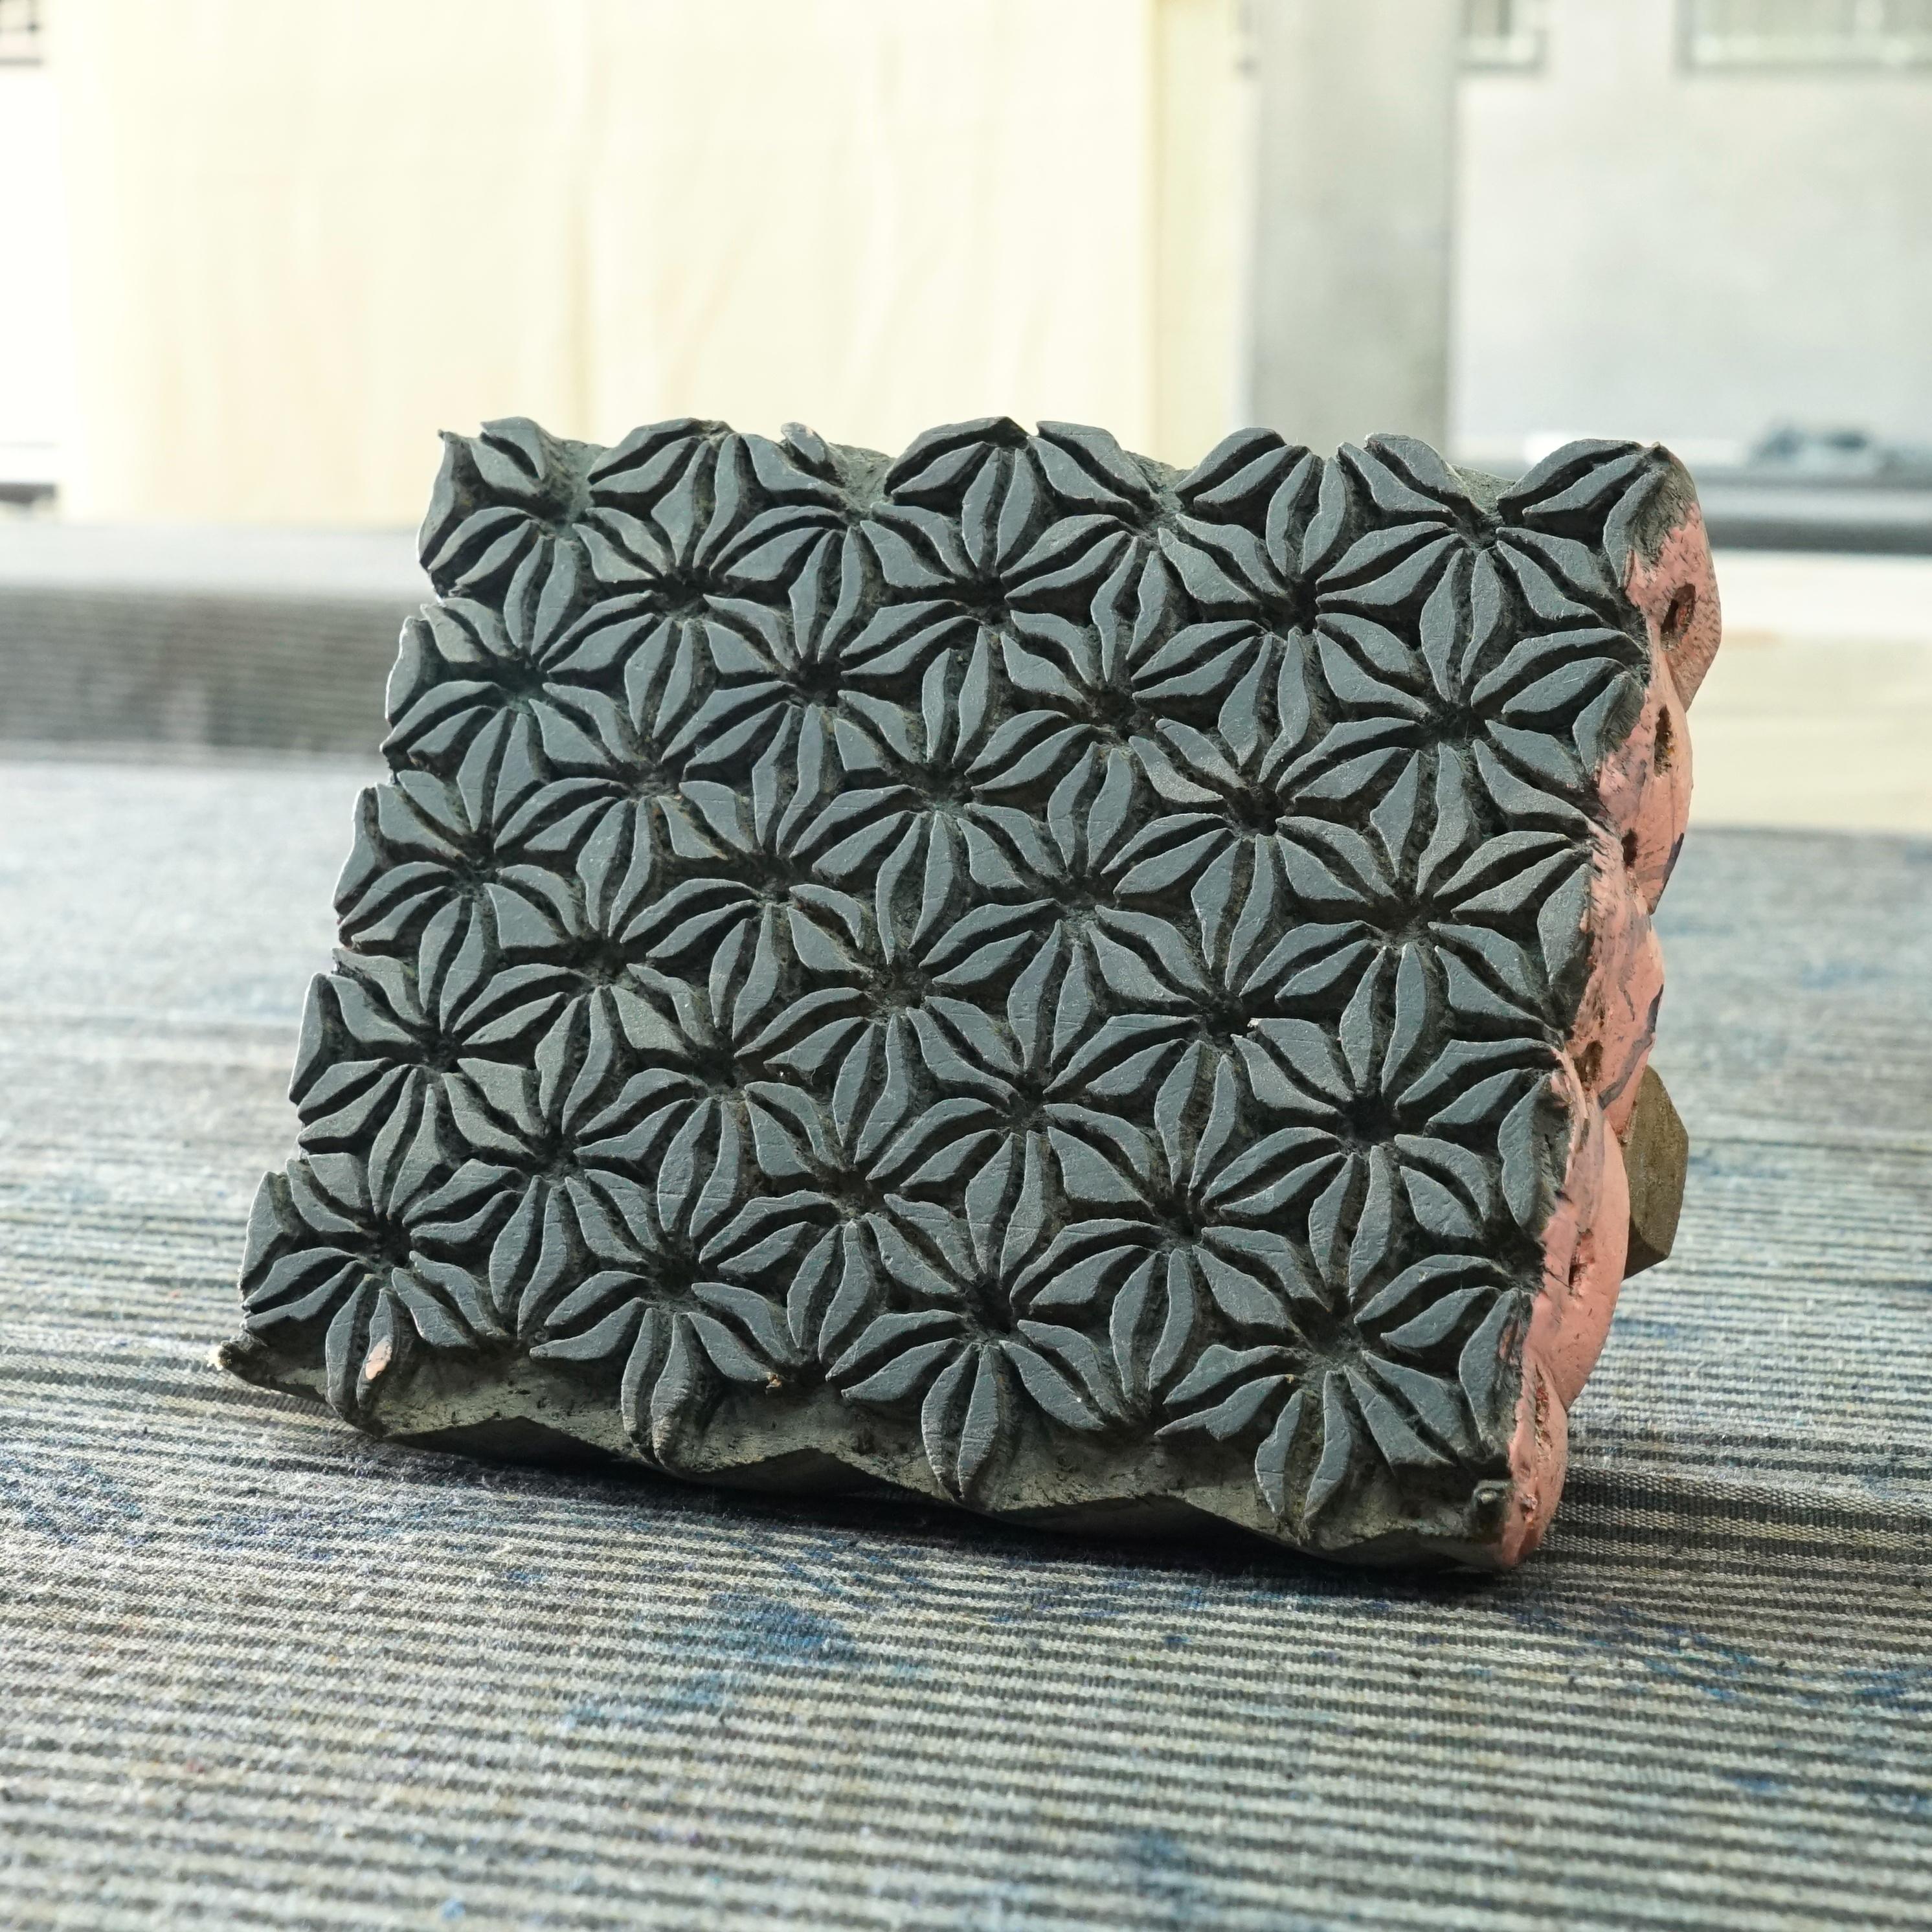 SIK20 - Block-Printed Cotton Fabric - Starfish Design - Black Iron Dye - Blocks